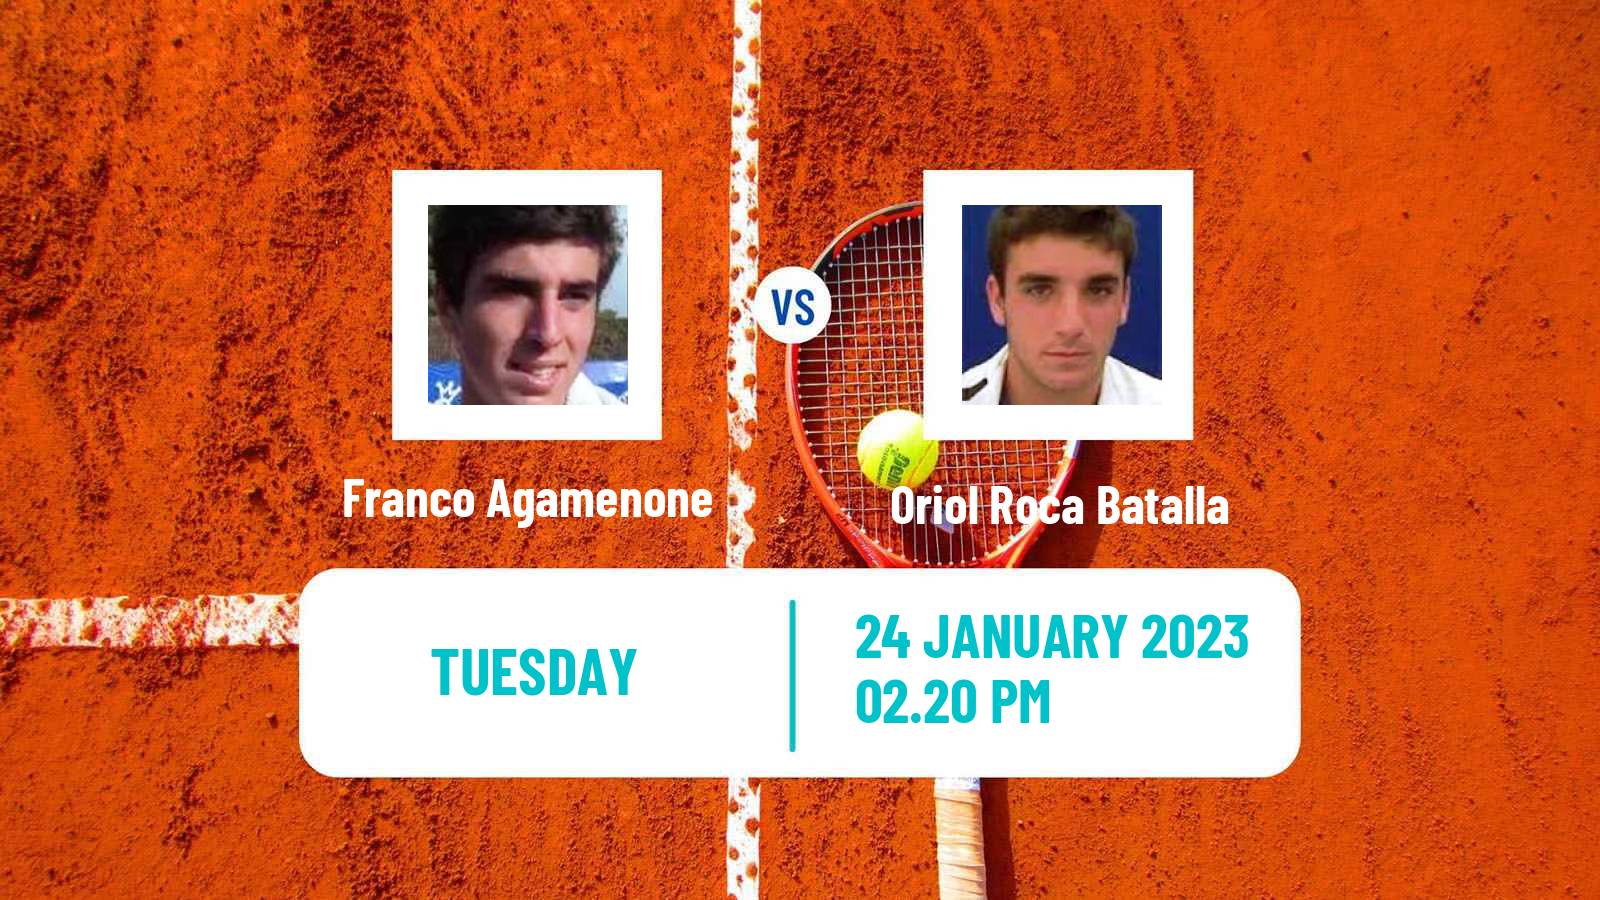 Tennis ATP Challenger Franco Agamenone - Oriol Roca Batalla